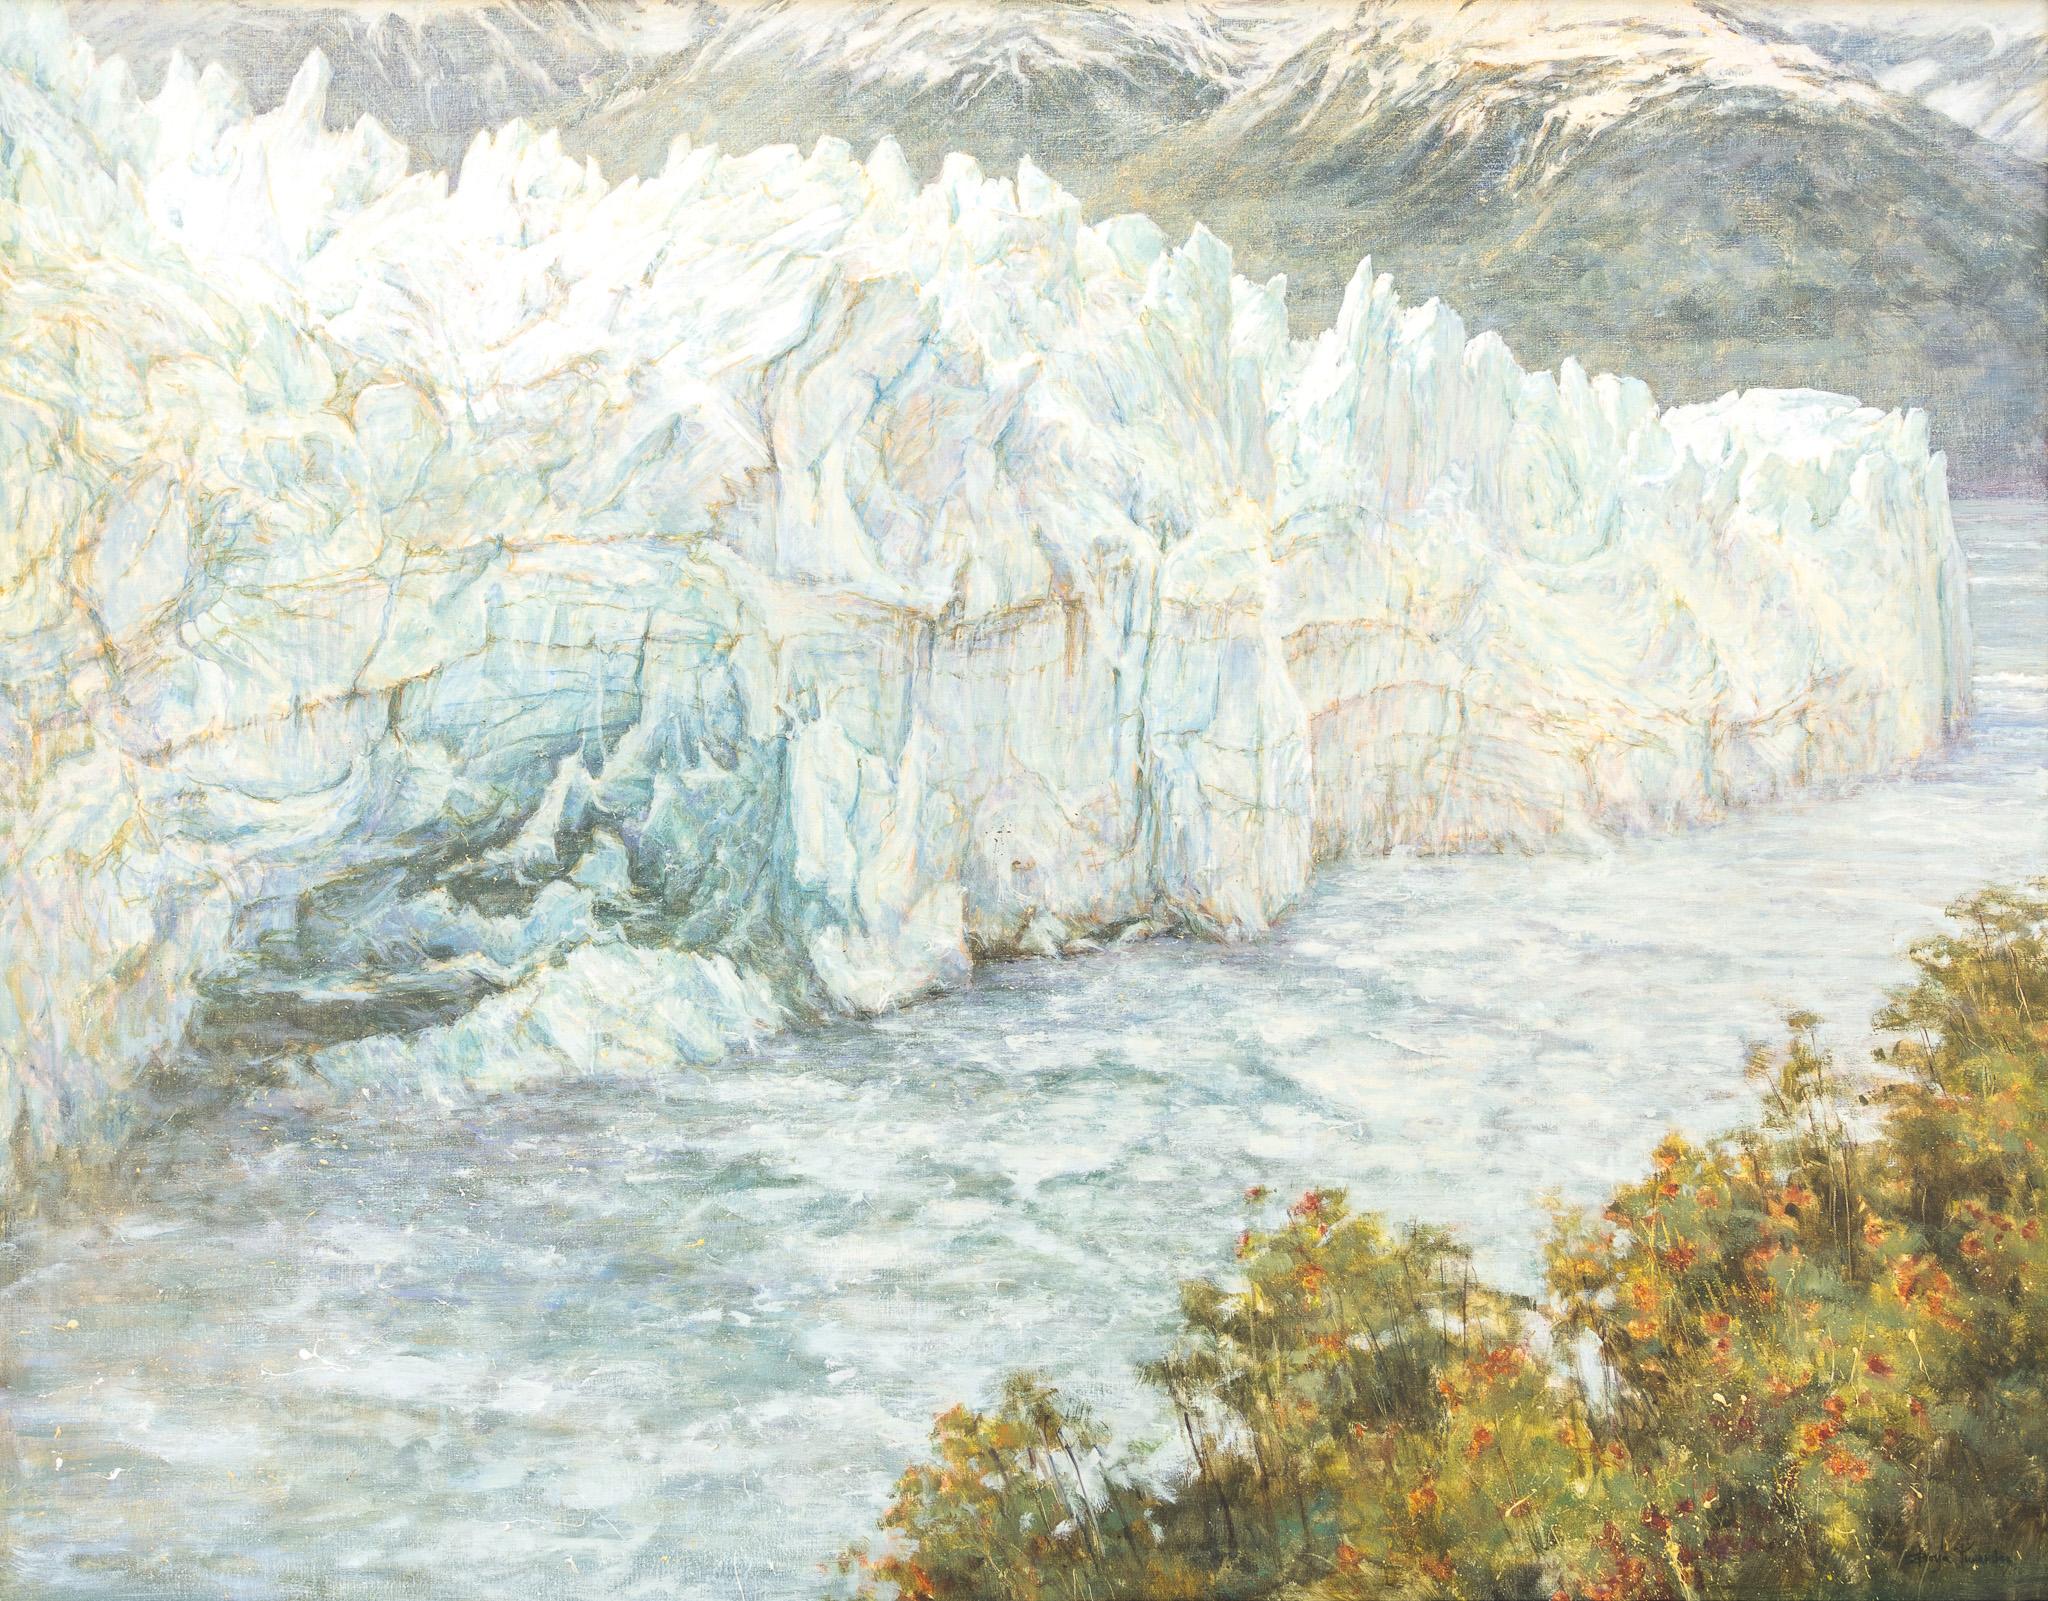 Borja Fernandez Landscape Painting - "Glacier Perito Moreno" Impressionist Landscape of Patagonia, Argentina